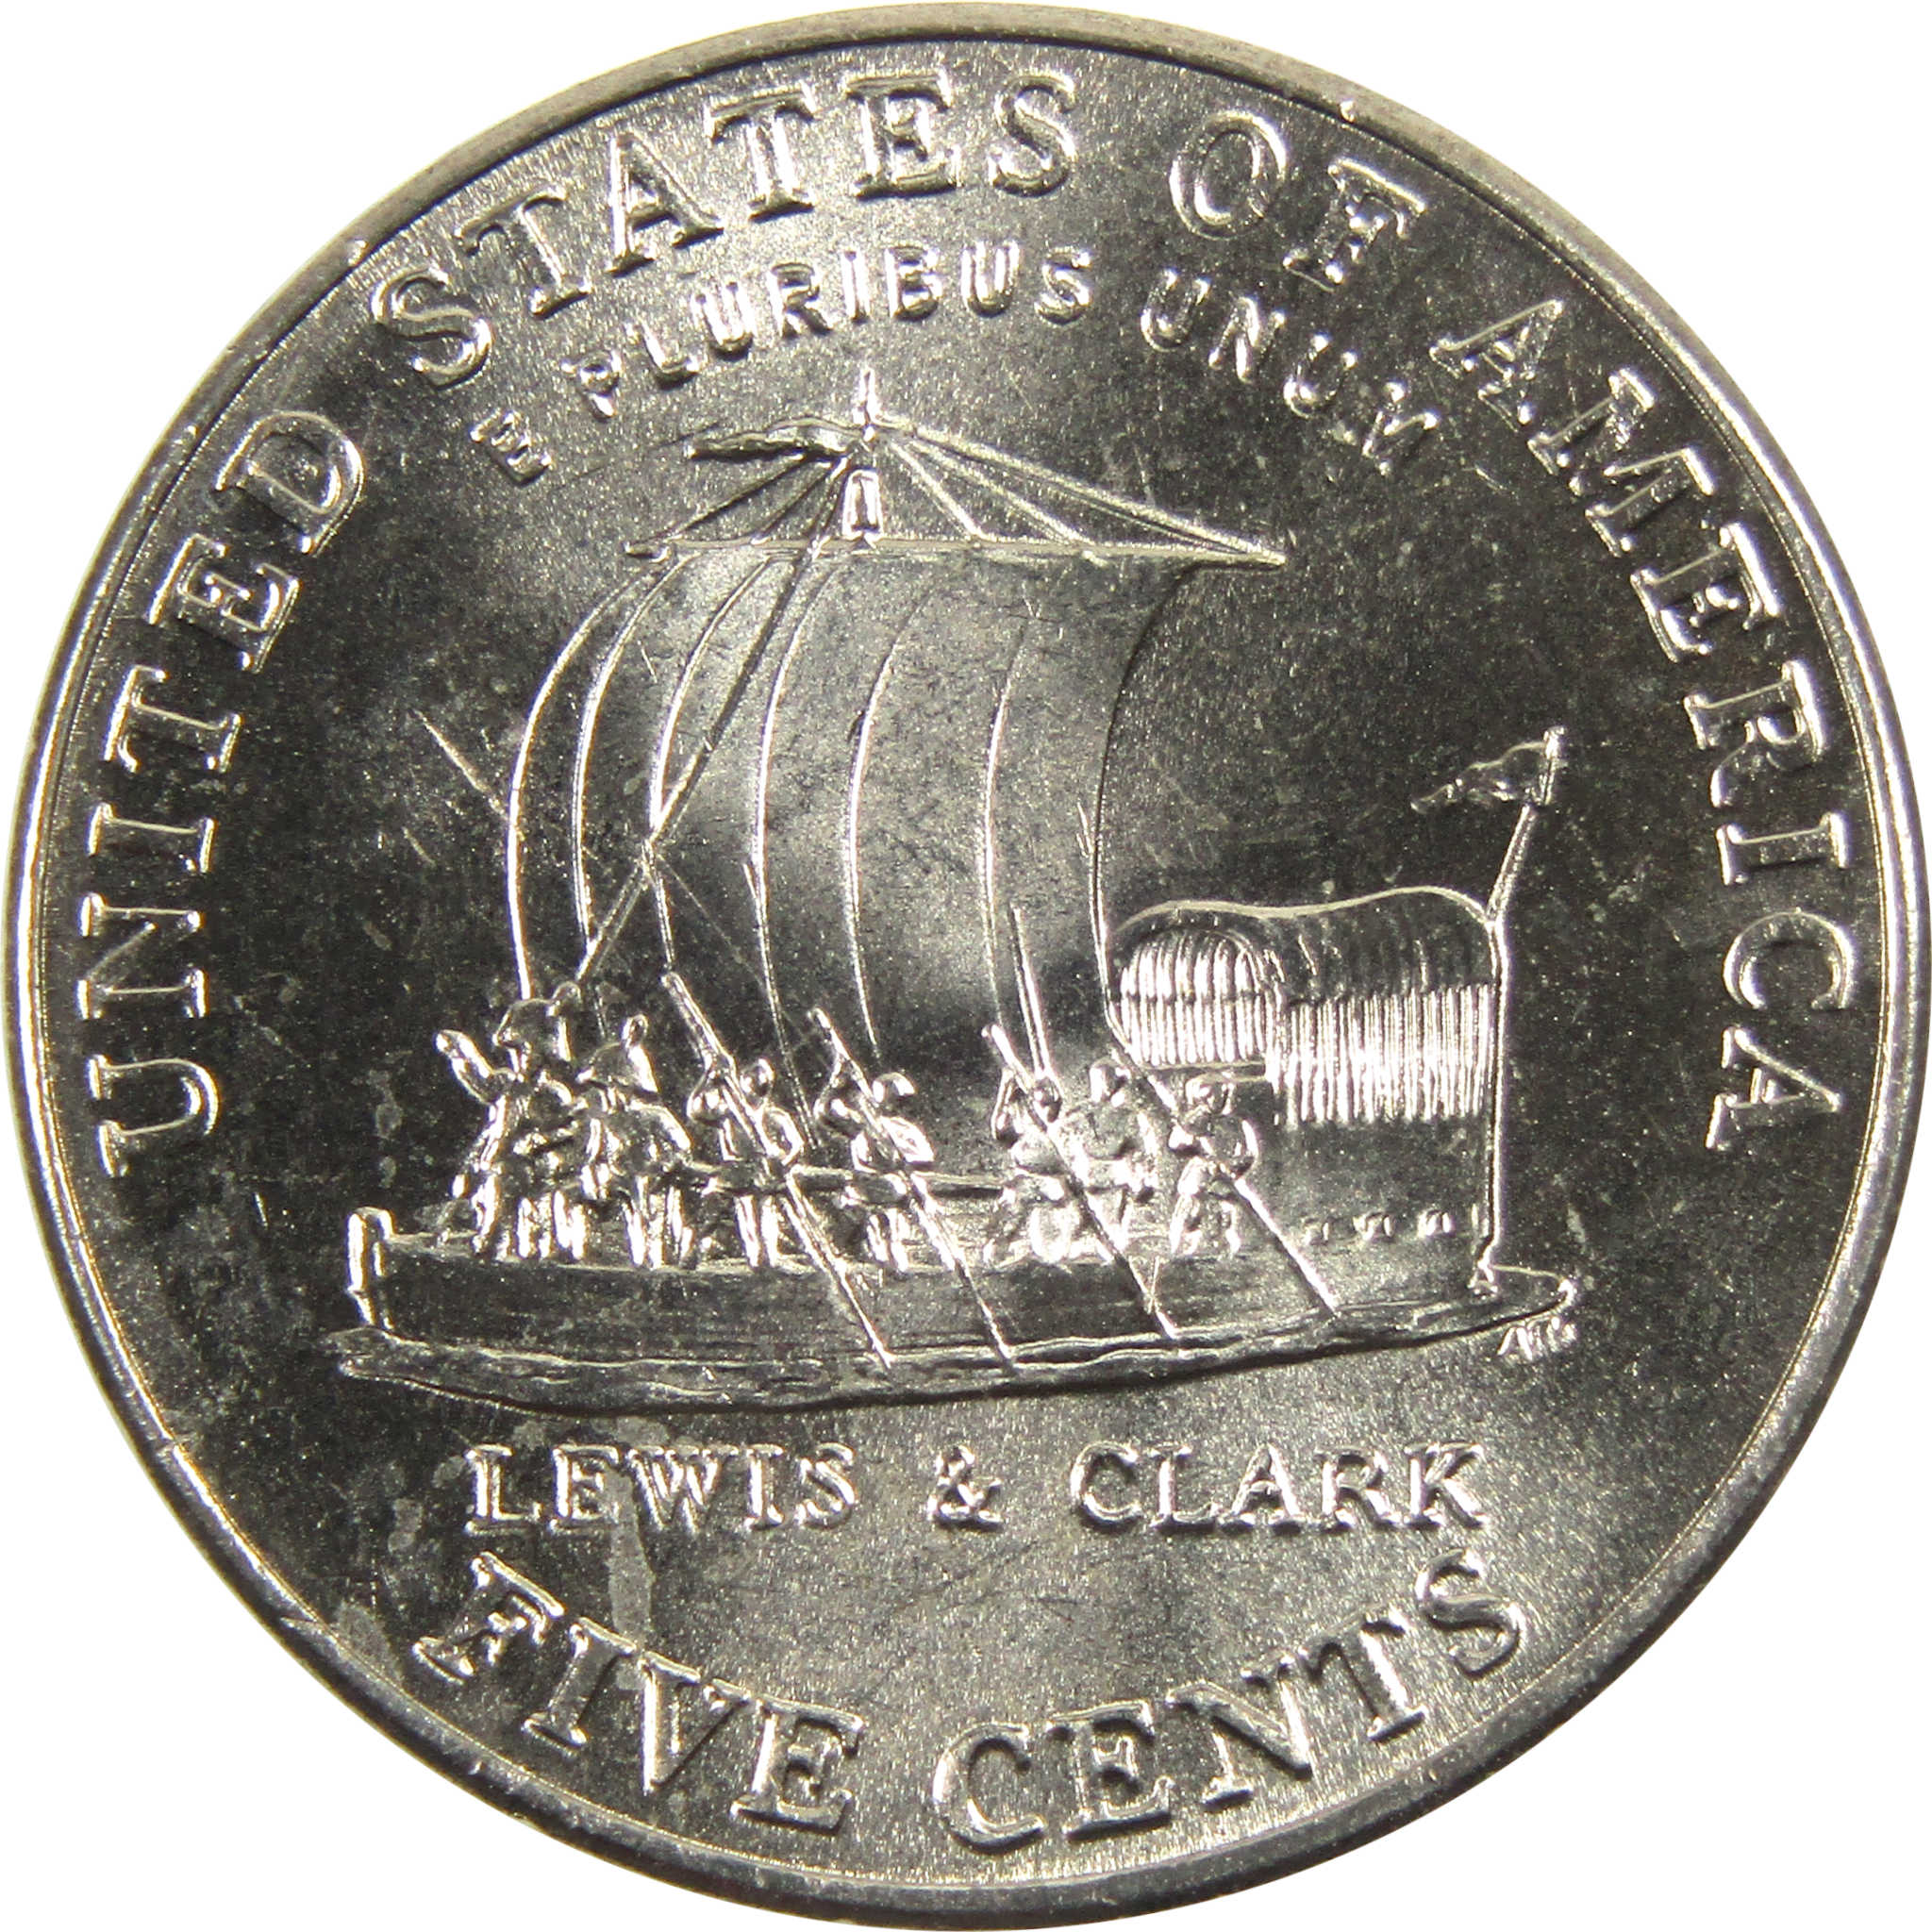 2004 D Keelboat Jefferson Nickel BU Uncirculated 5c Coin